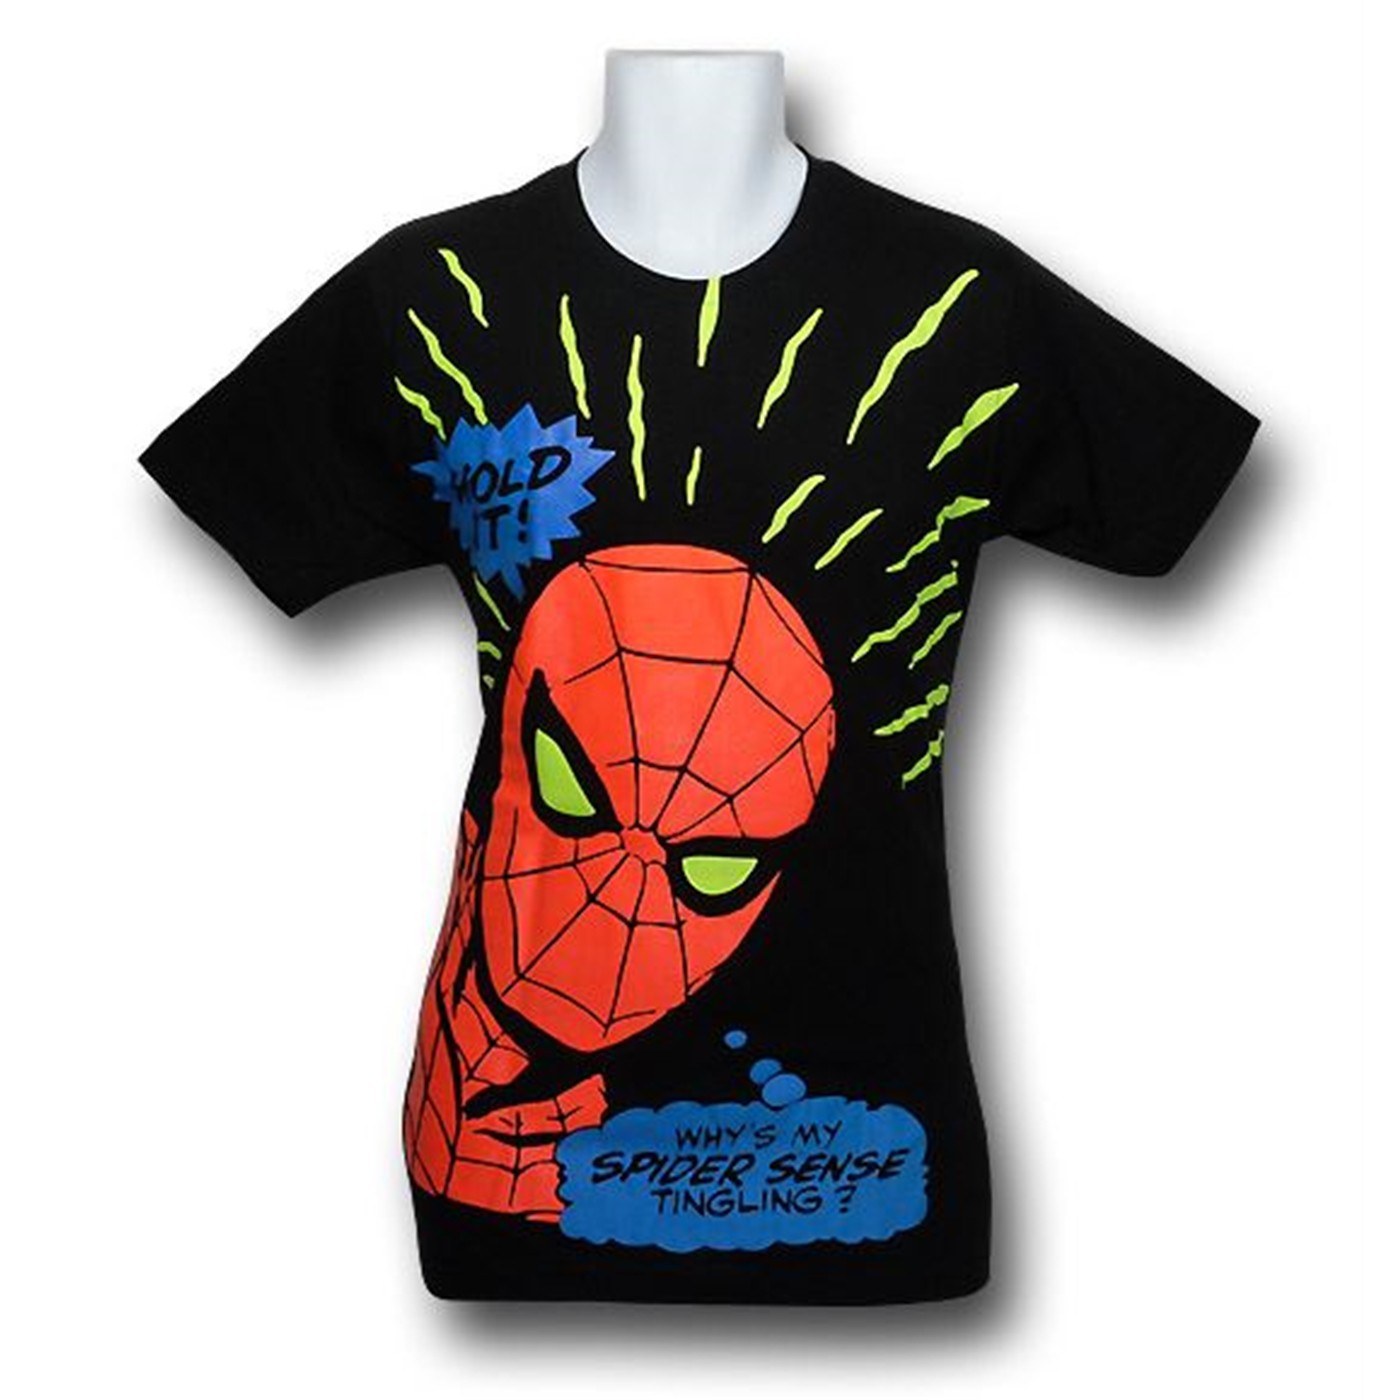 Spiderman Hold It! 30 Single T-Shirt